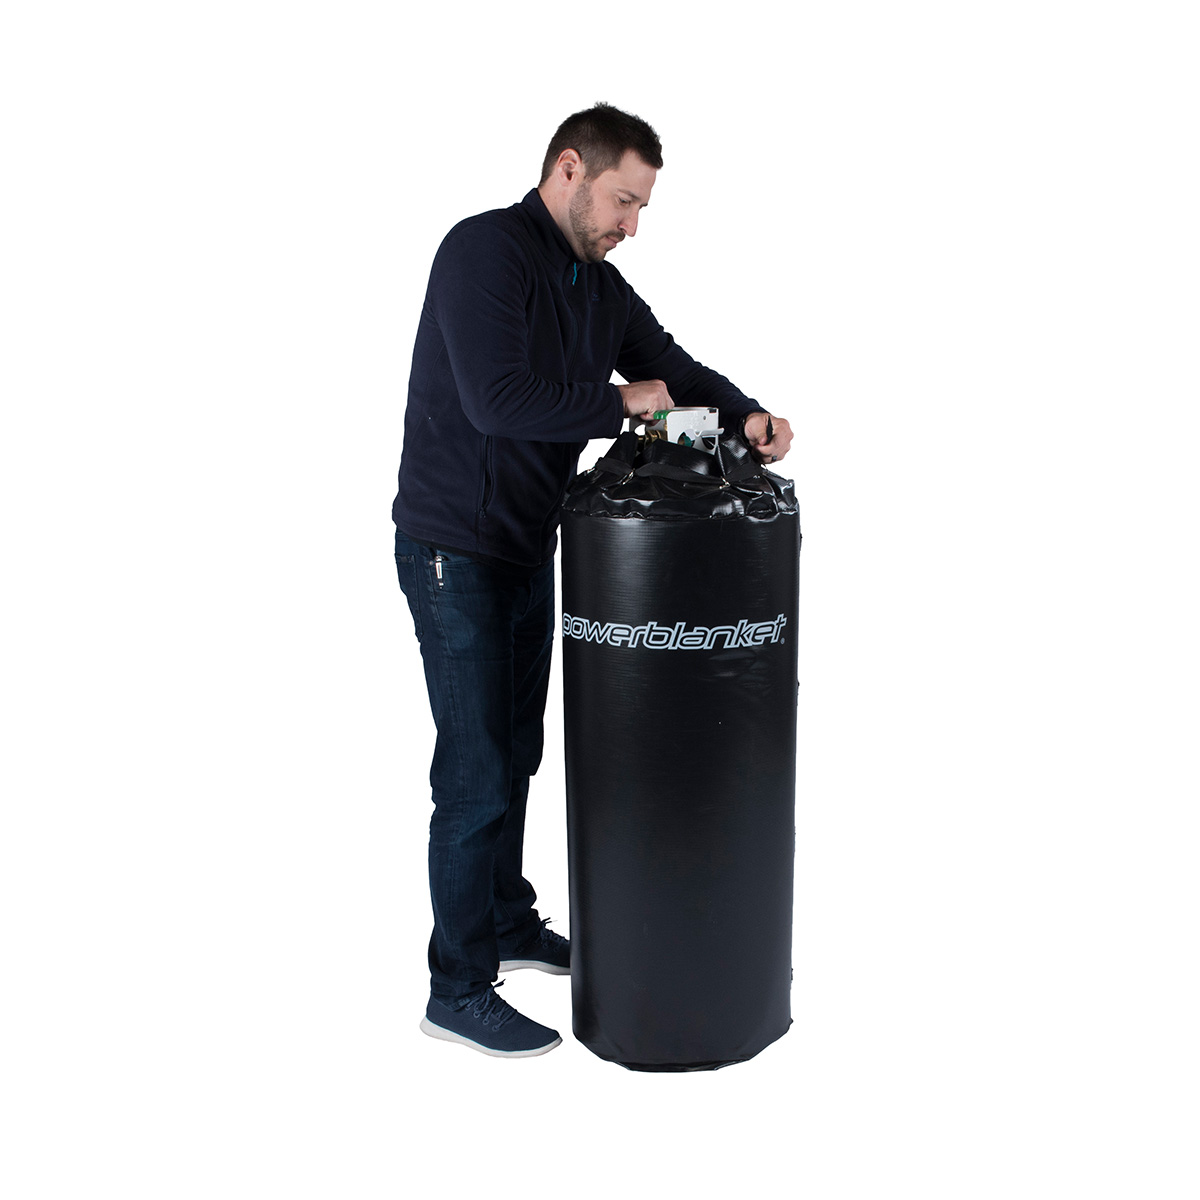 Propane Heater - Powerblanket Lite 500-Gallon GAS Cylinder Tank Heater, 100F